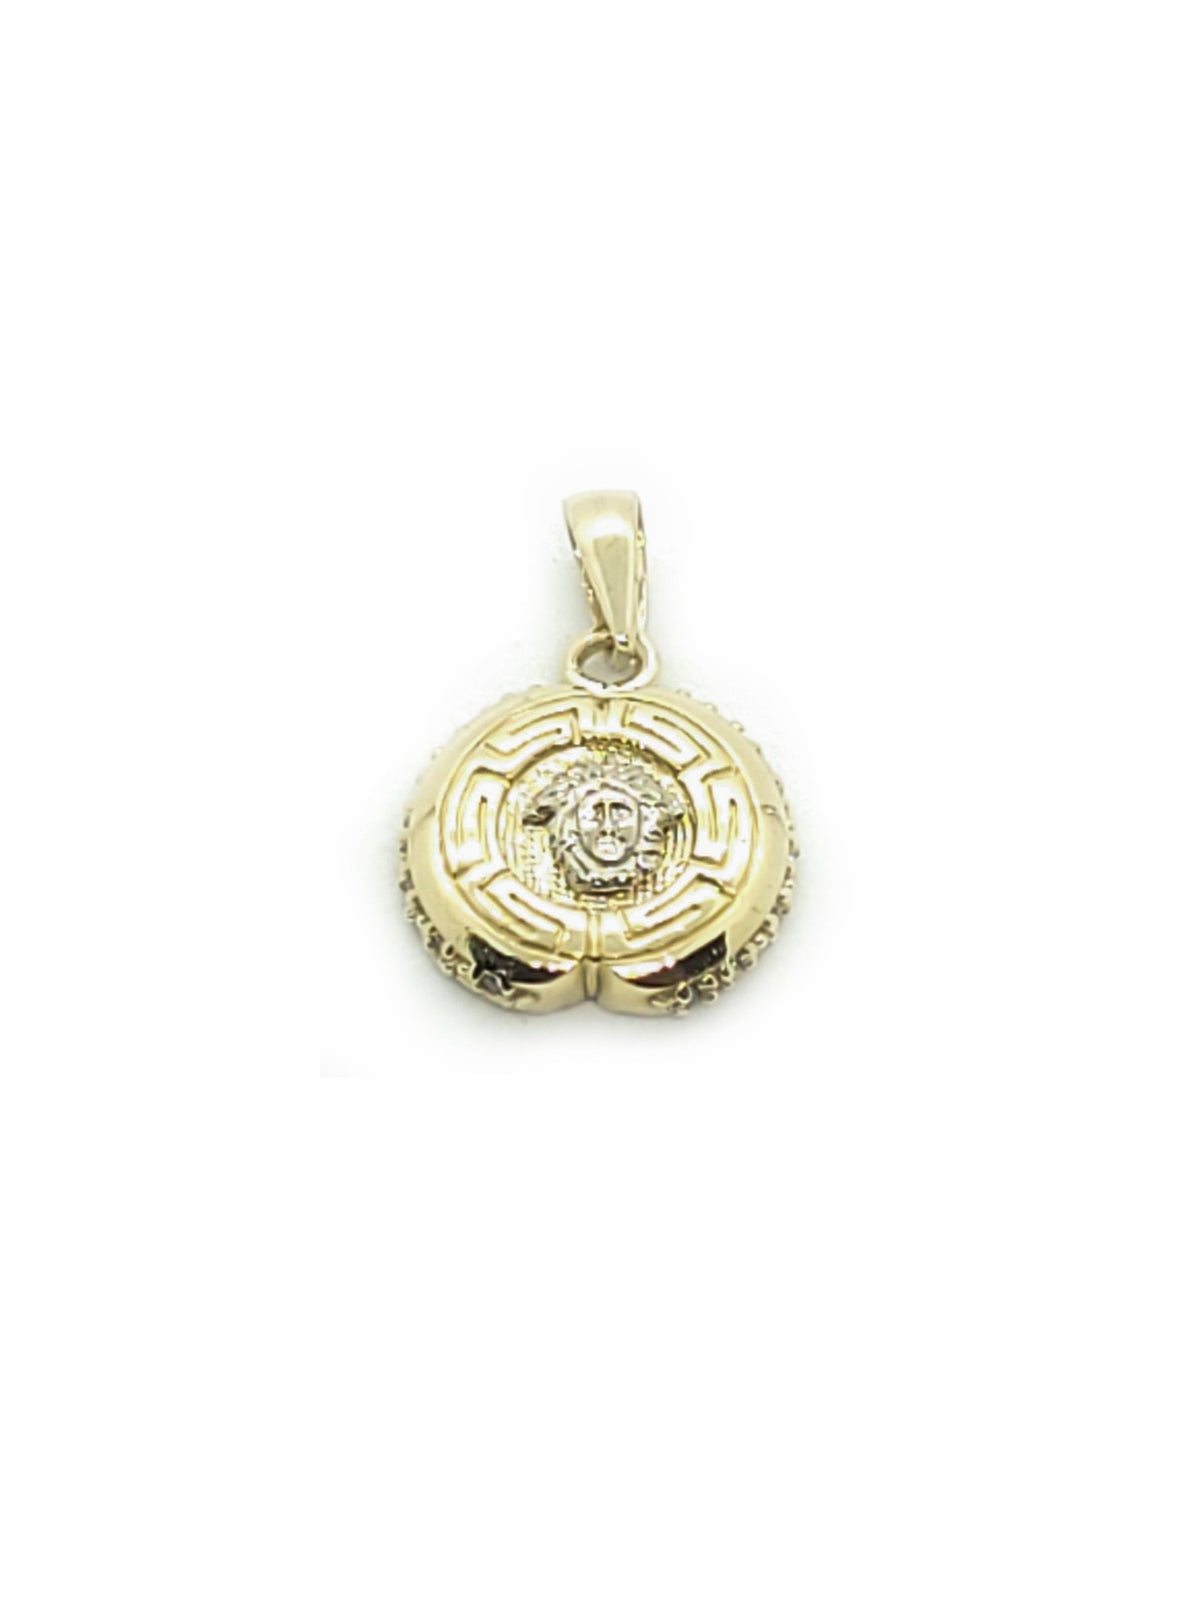 Round Gold Pendant with Medusa Design